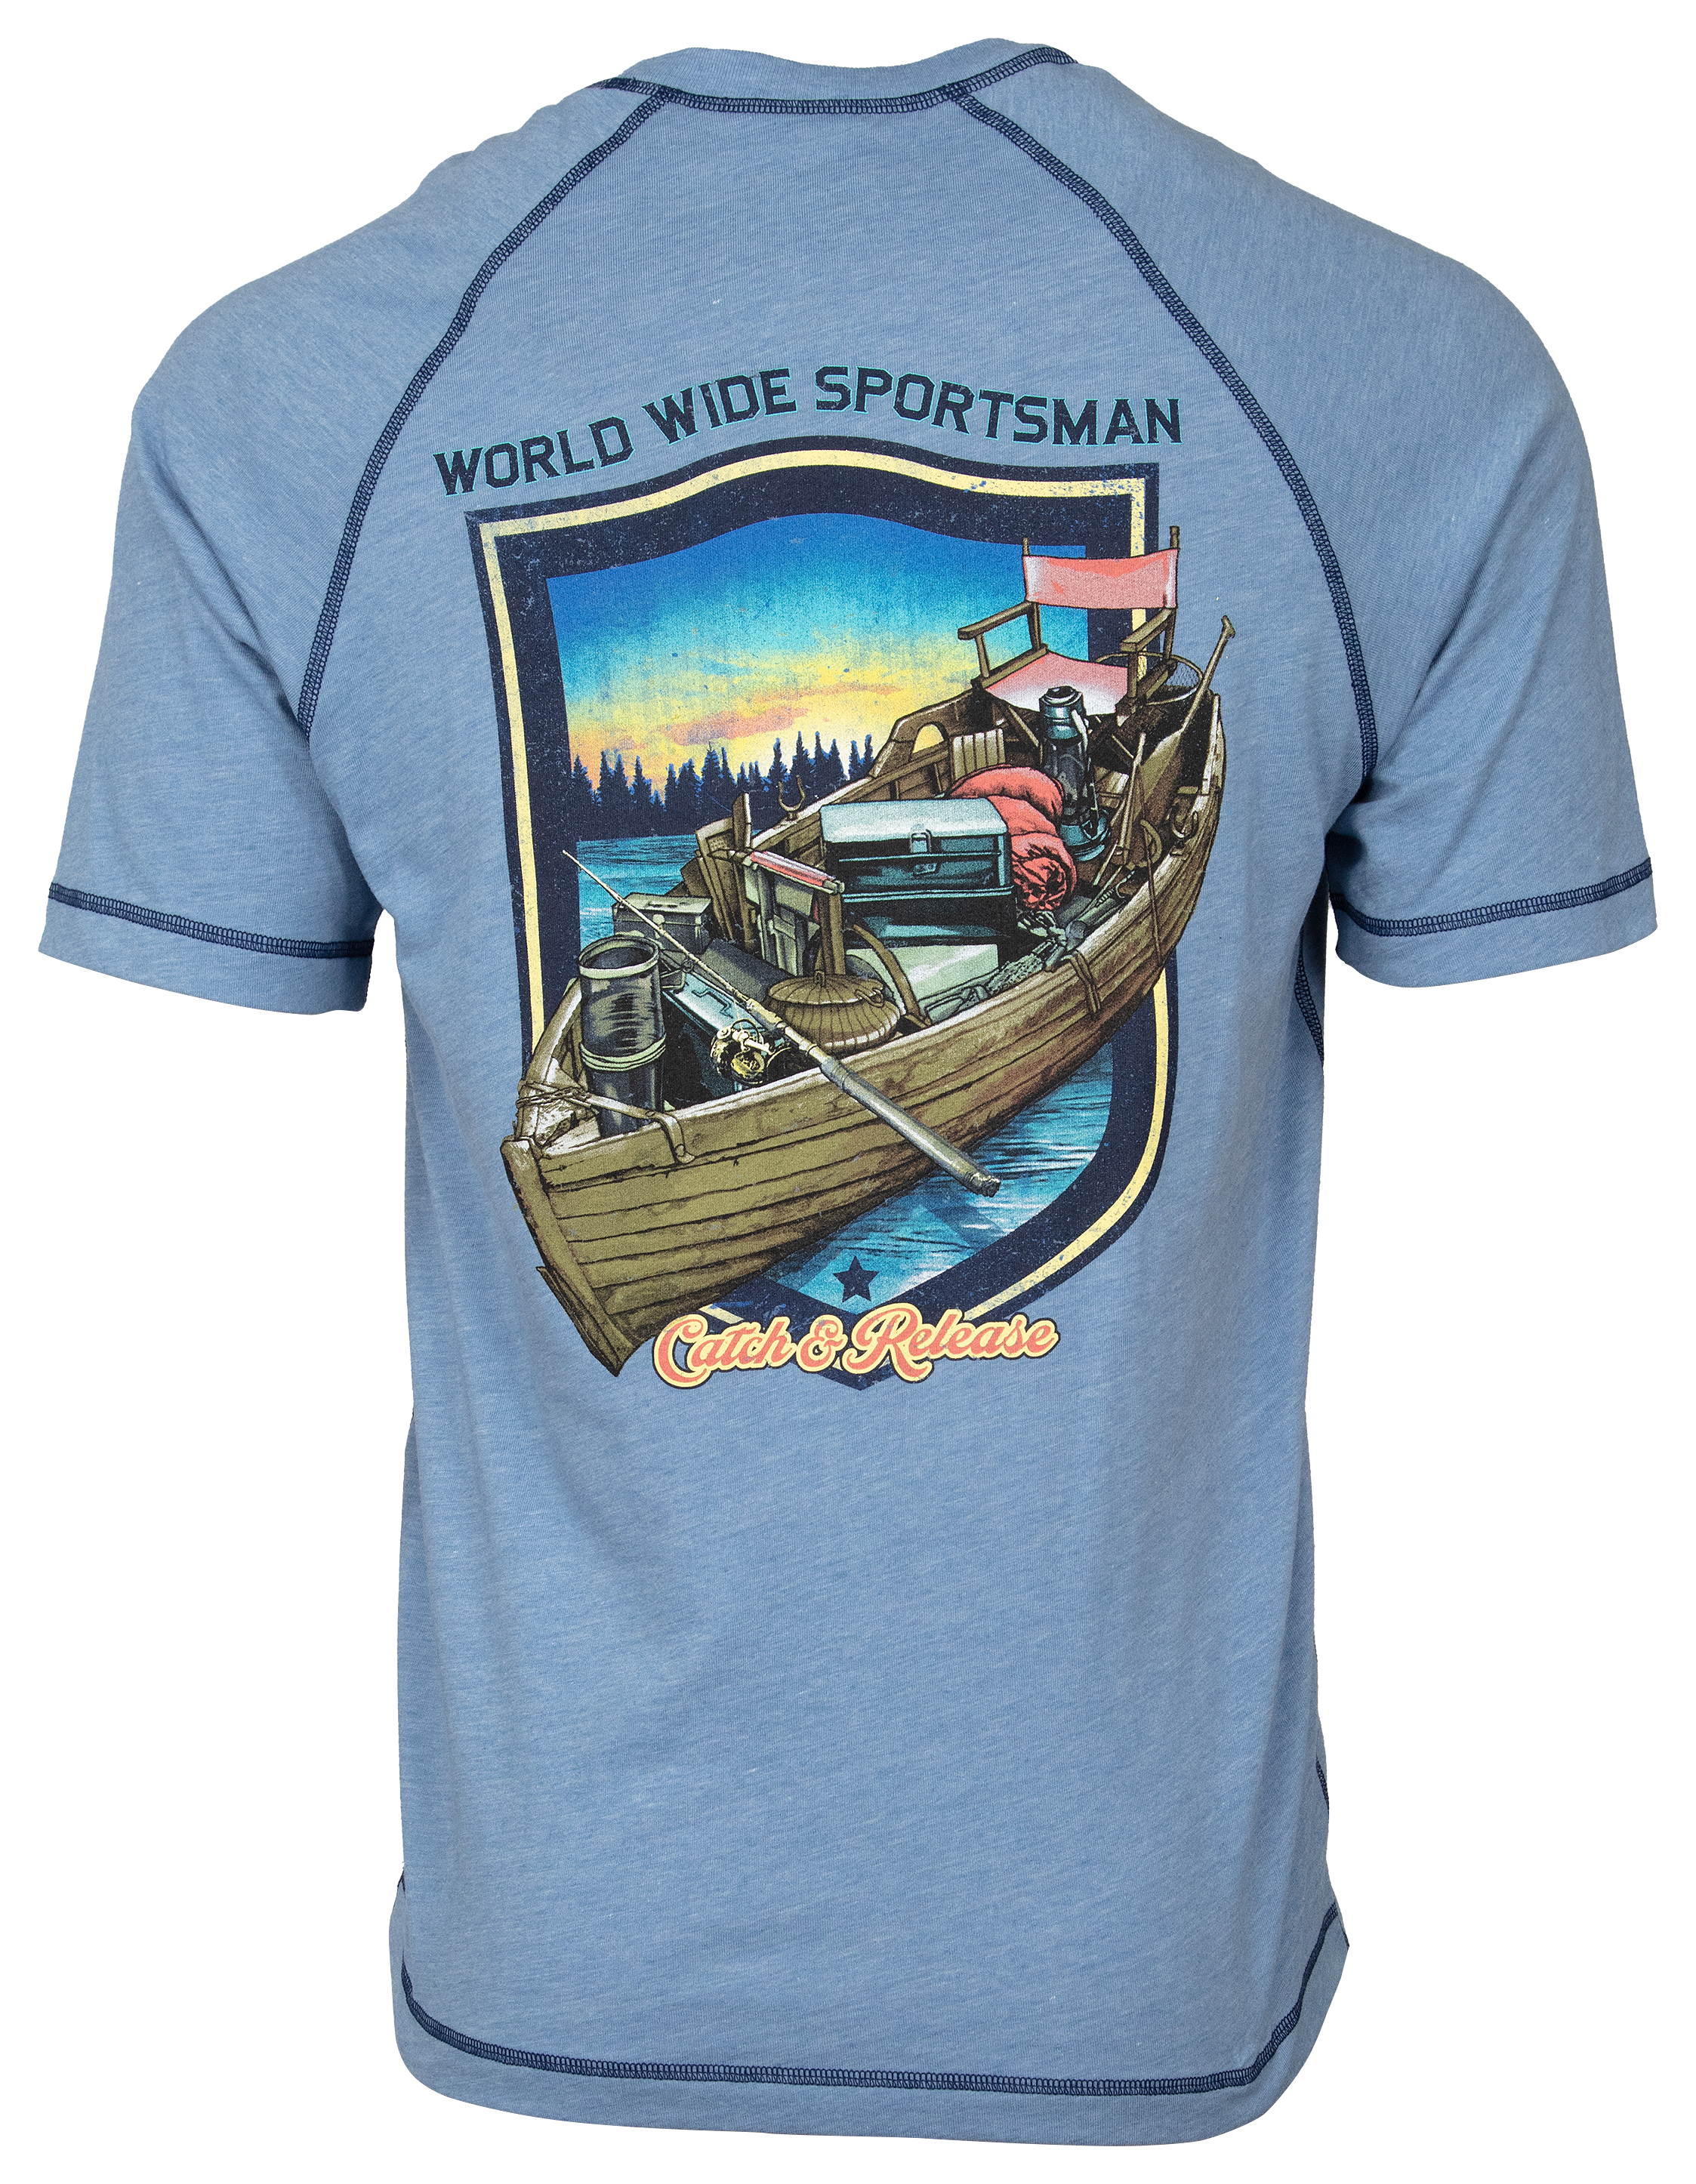 World Wide Sportsman Vintage Catch and Release Short-Sleeve Crew Neck T-Shirt for Men - Cobalt - M